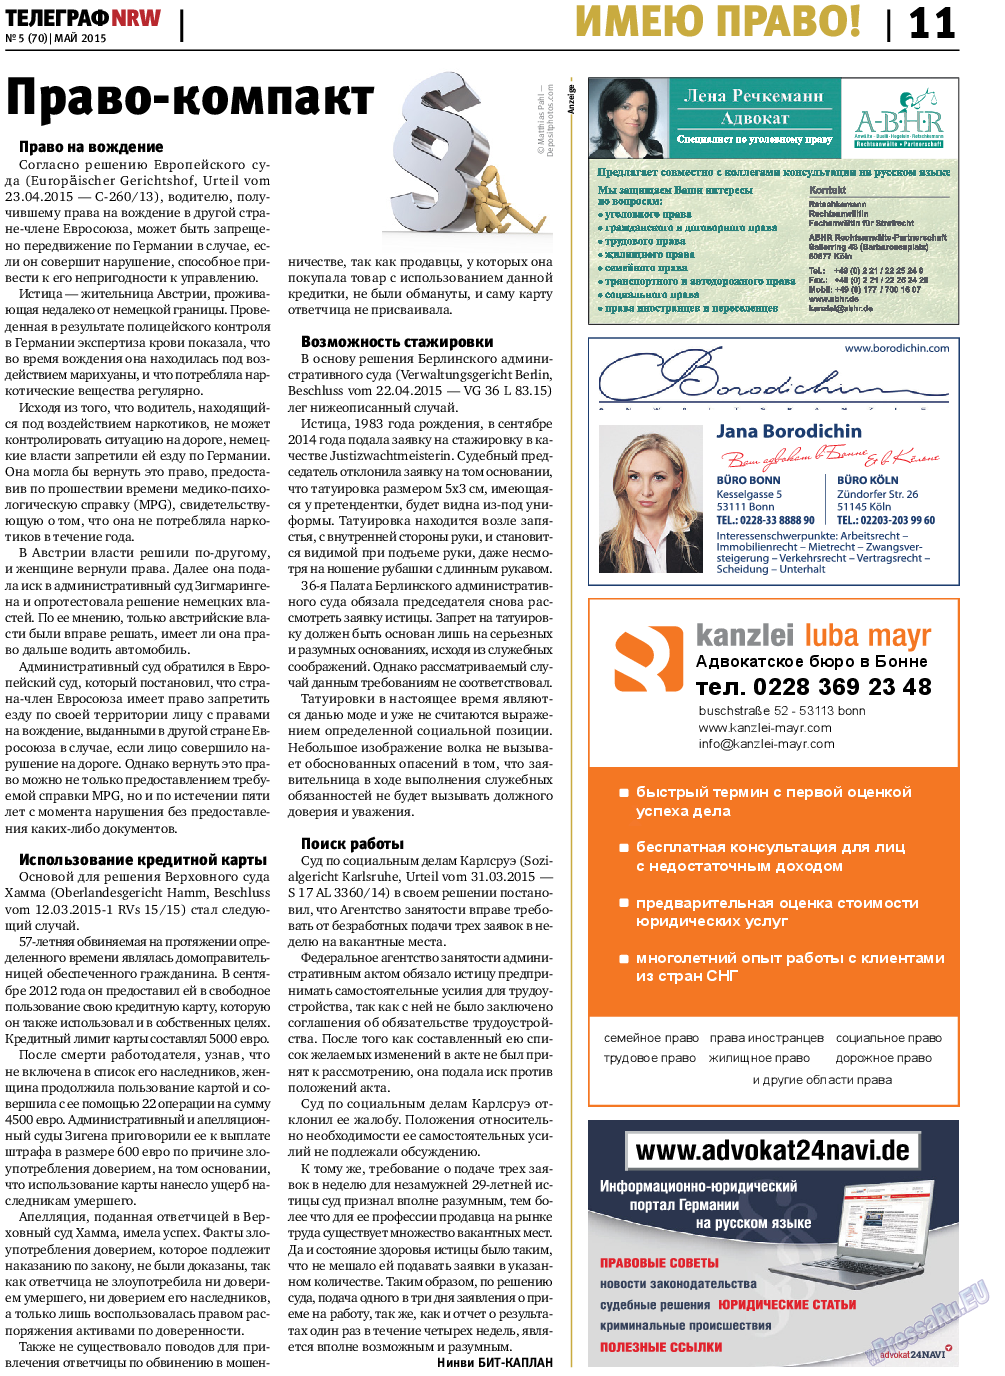 Телеграф NRW, газета. 2015 №5 стр.11